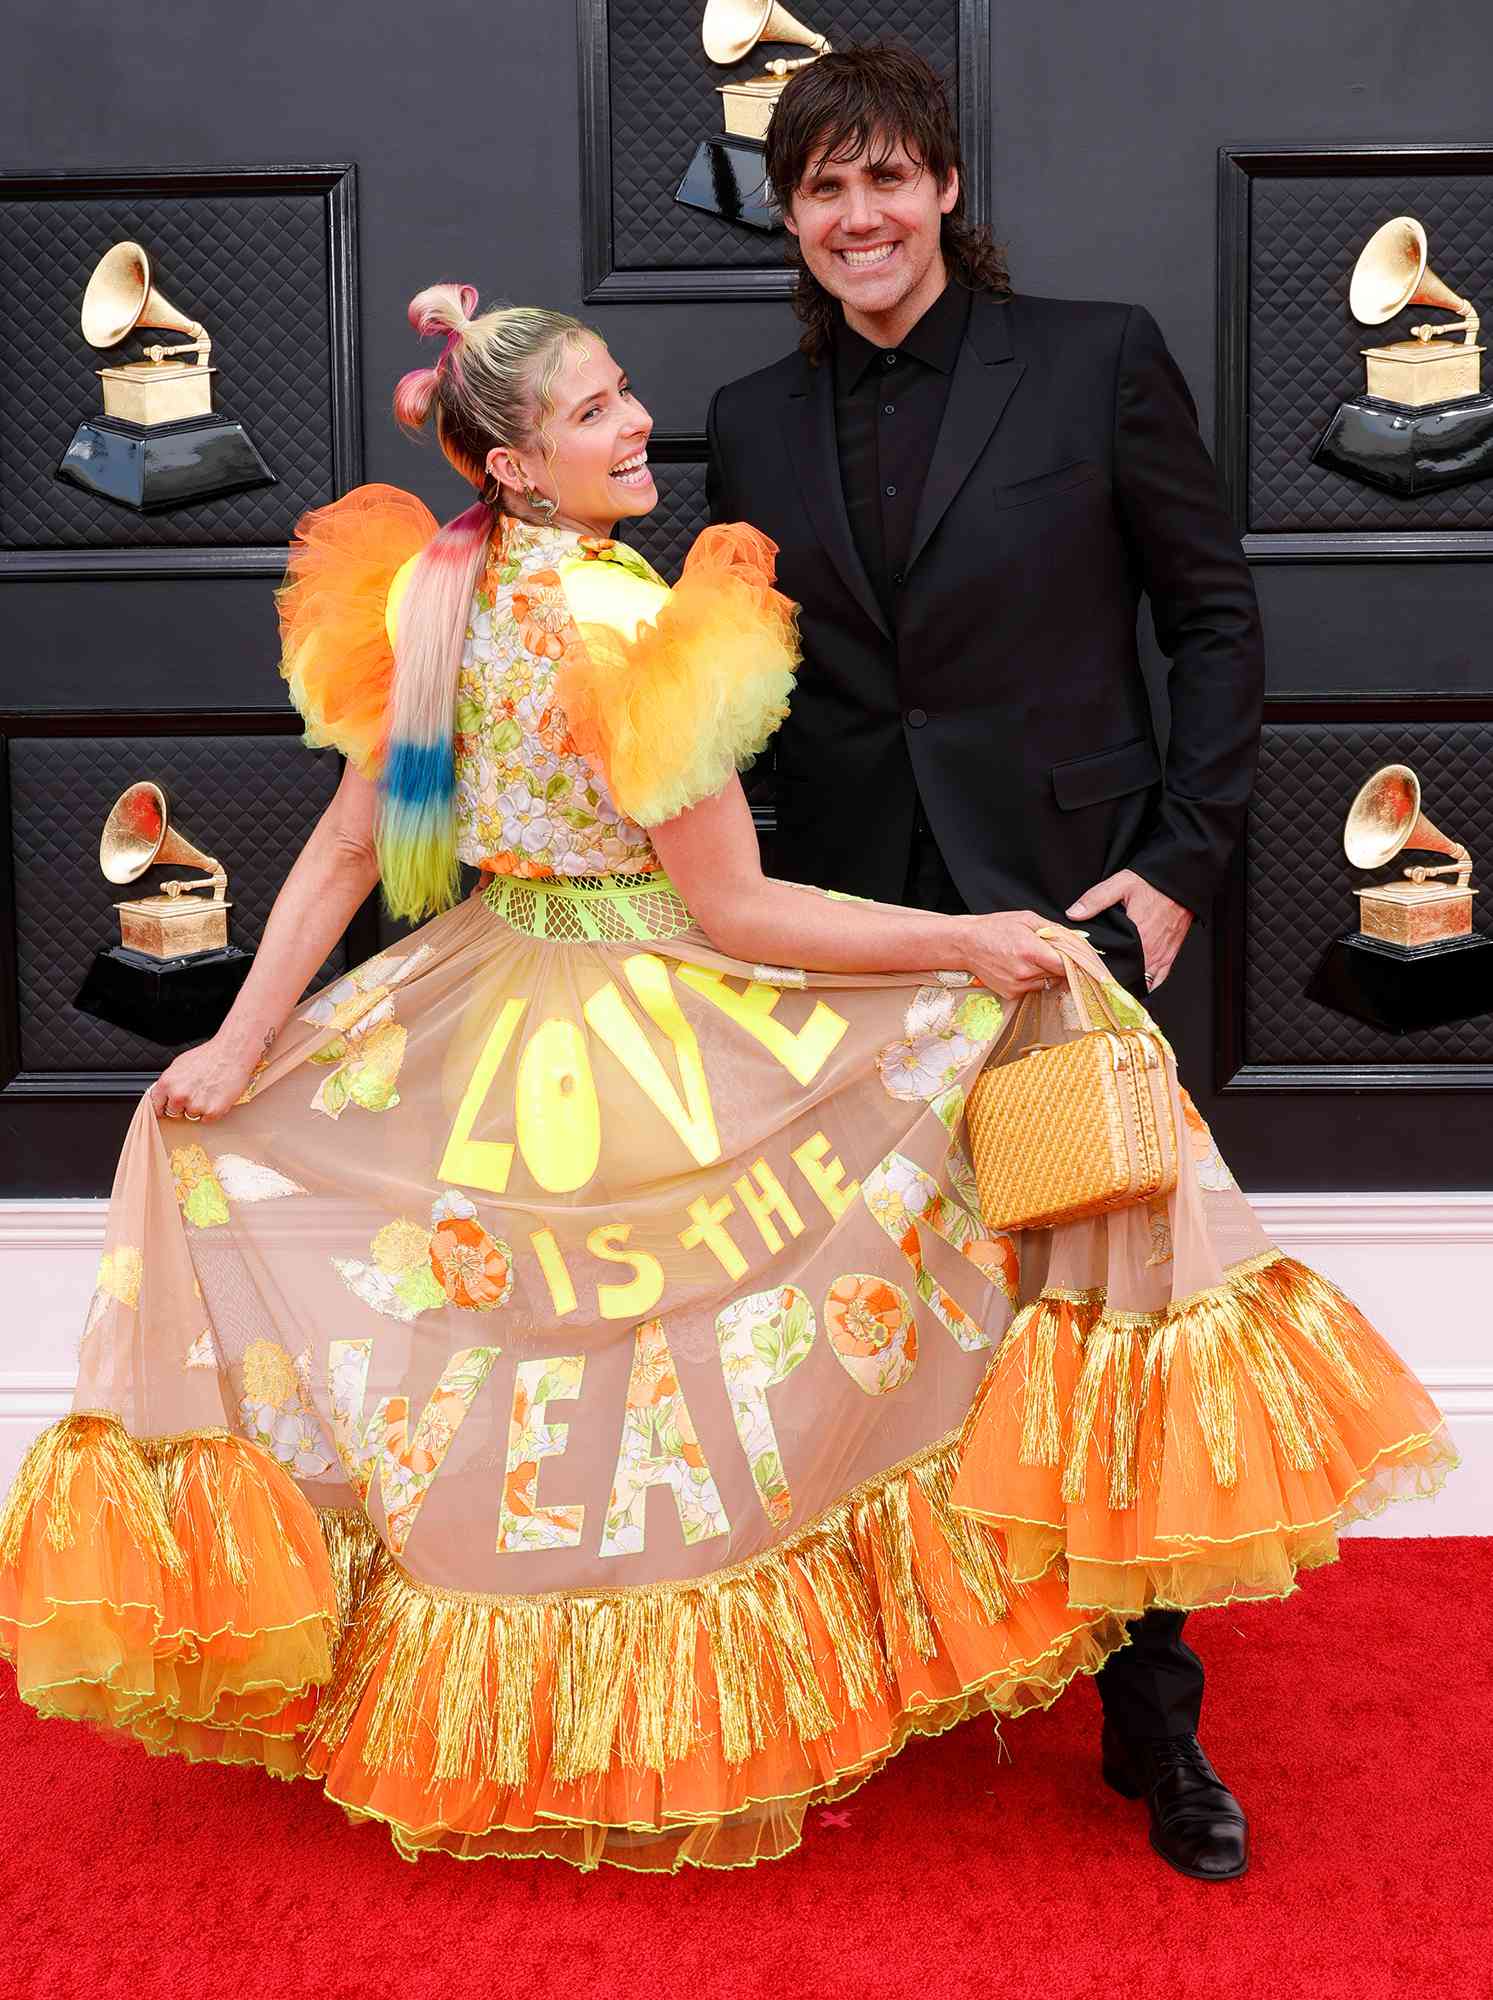 Grammys Awards Red Carpet Victoria Evigan of Elephant Heart and Jason Evigan